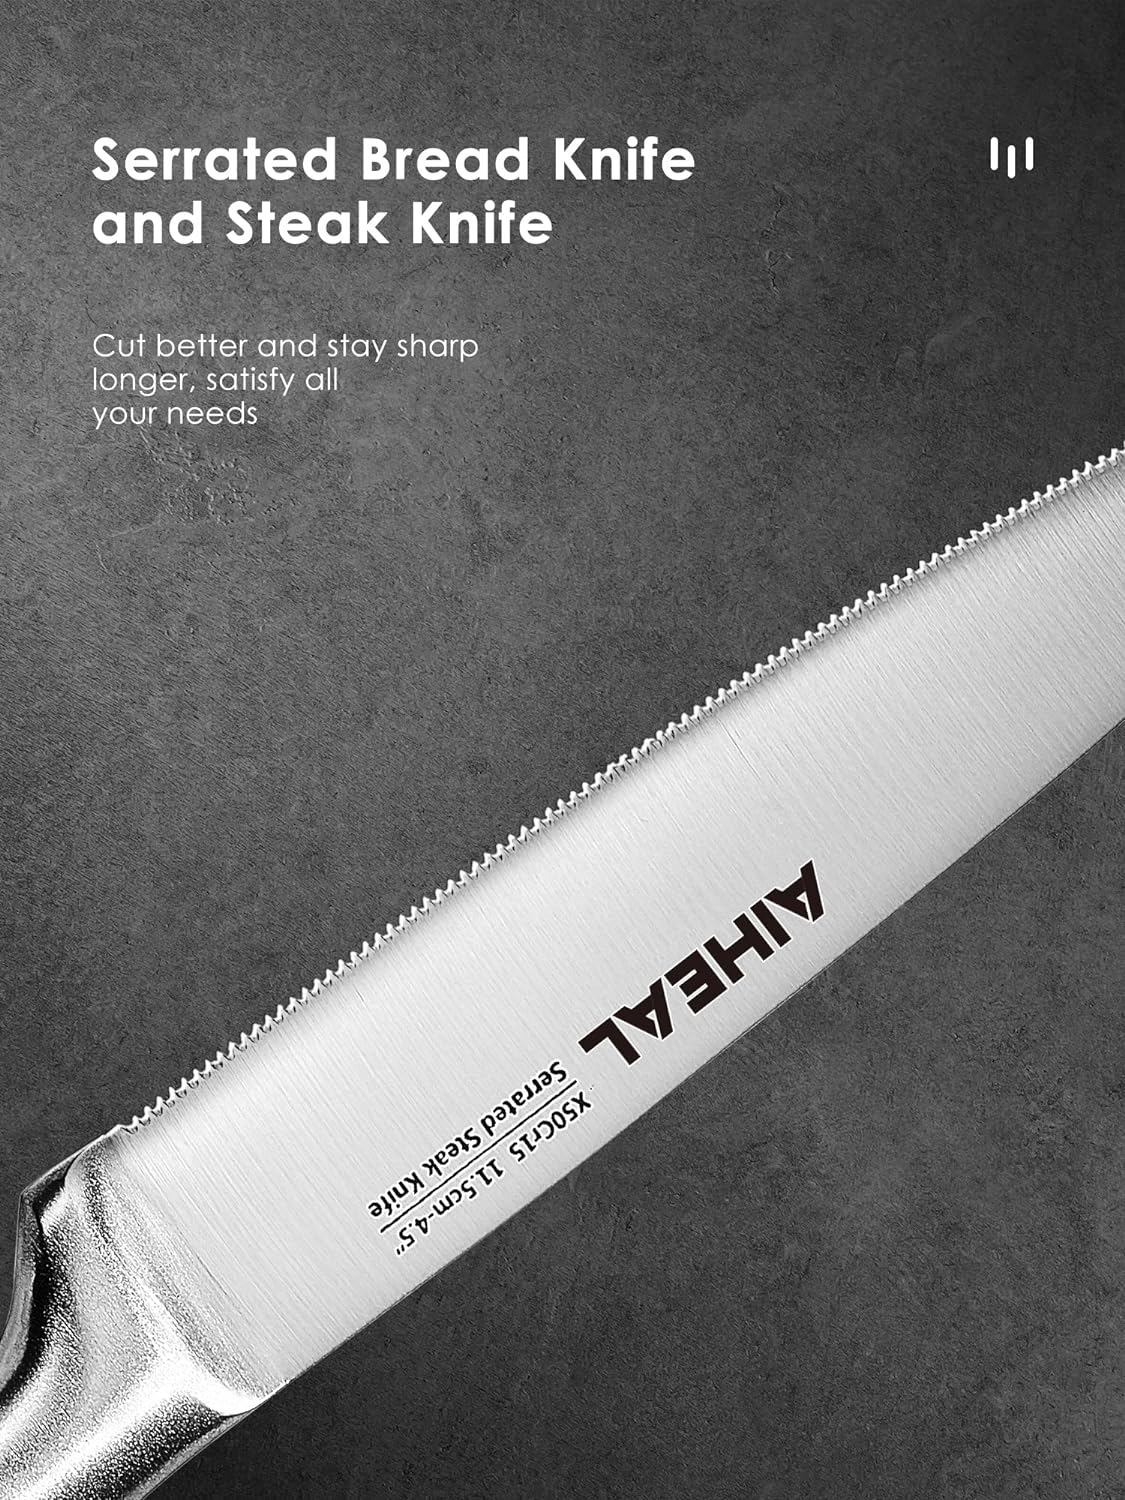 Stainless Steel Knife Set w/ Clear Block 17 Pc Set Sharpener Scissors  Countertop